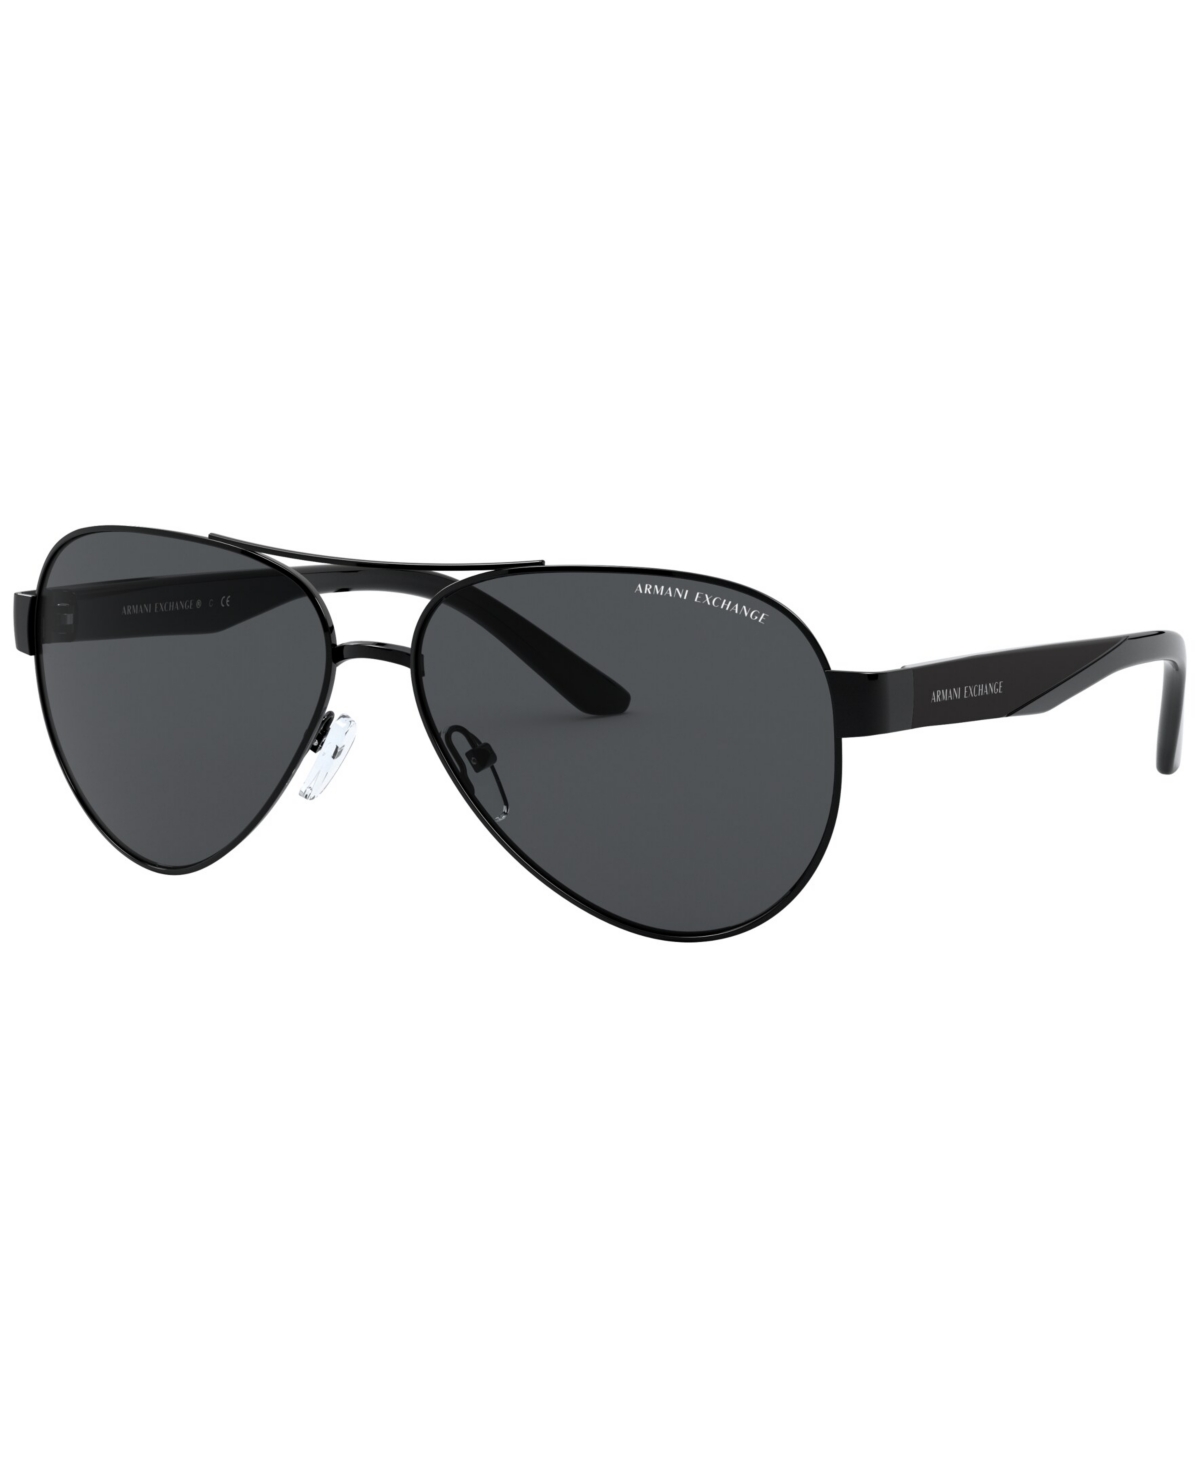 Ax Armani Exchange Men's Sunglasses, Ax2034s In Shiny Black